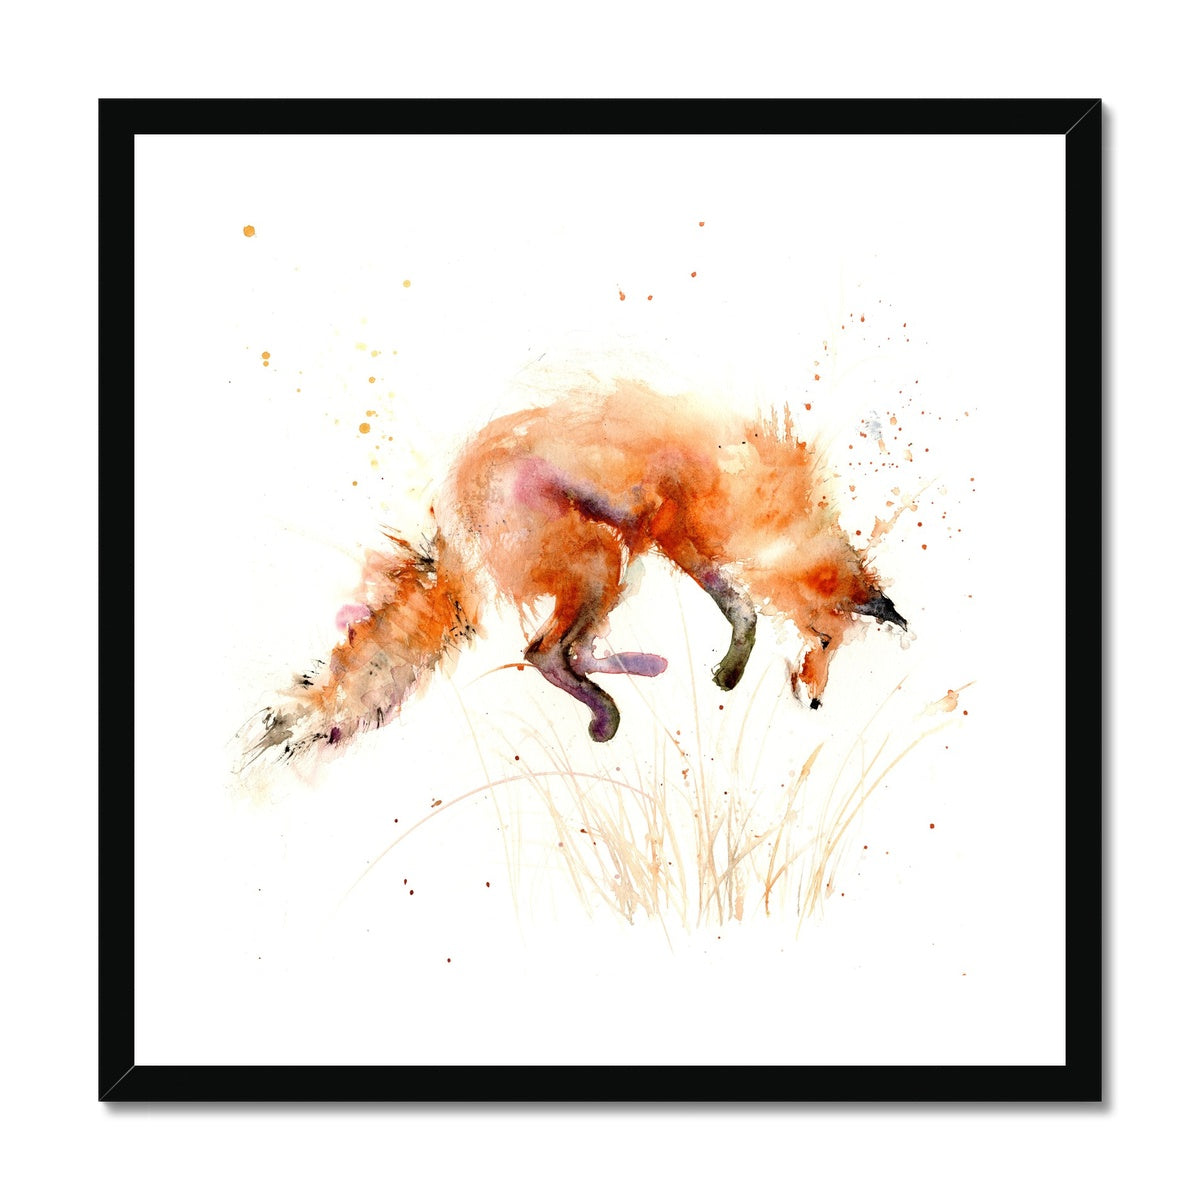 Lucas leaping fox Framed & Mounted Print